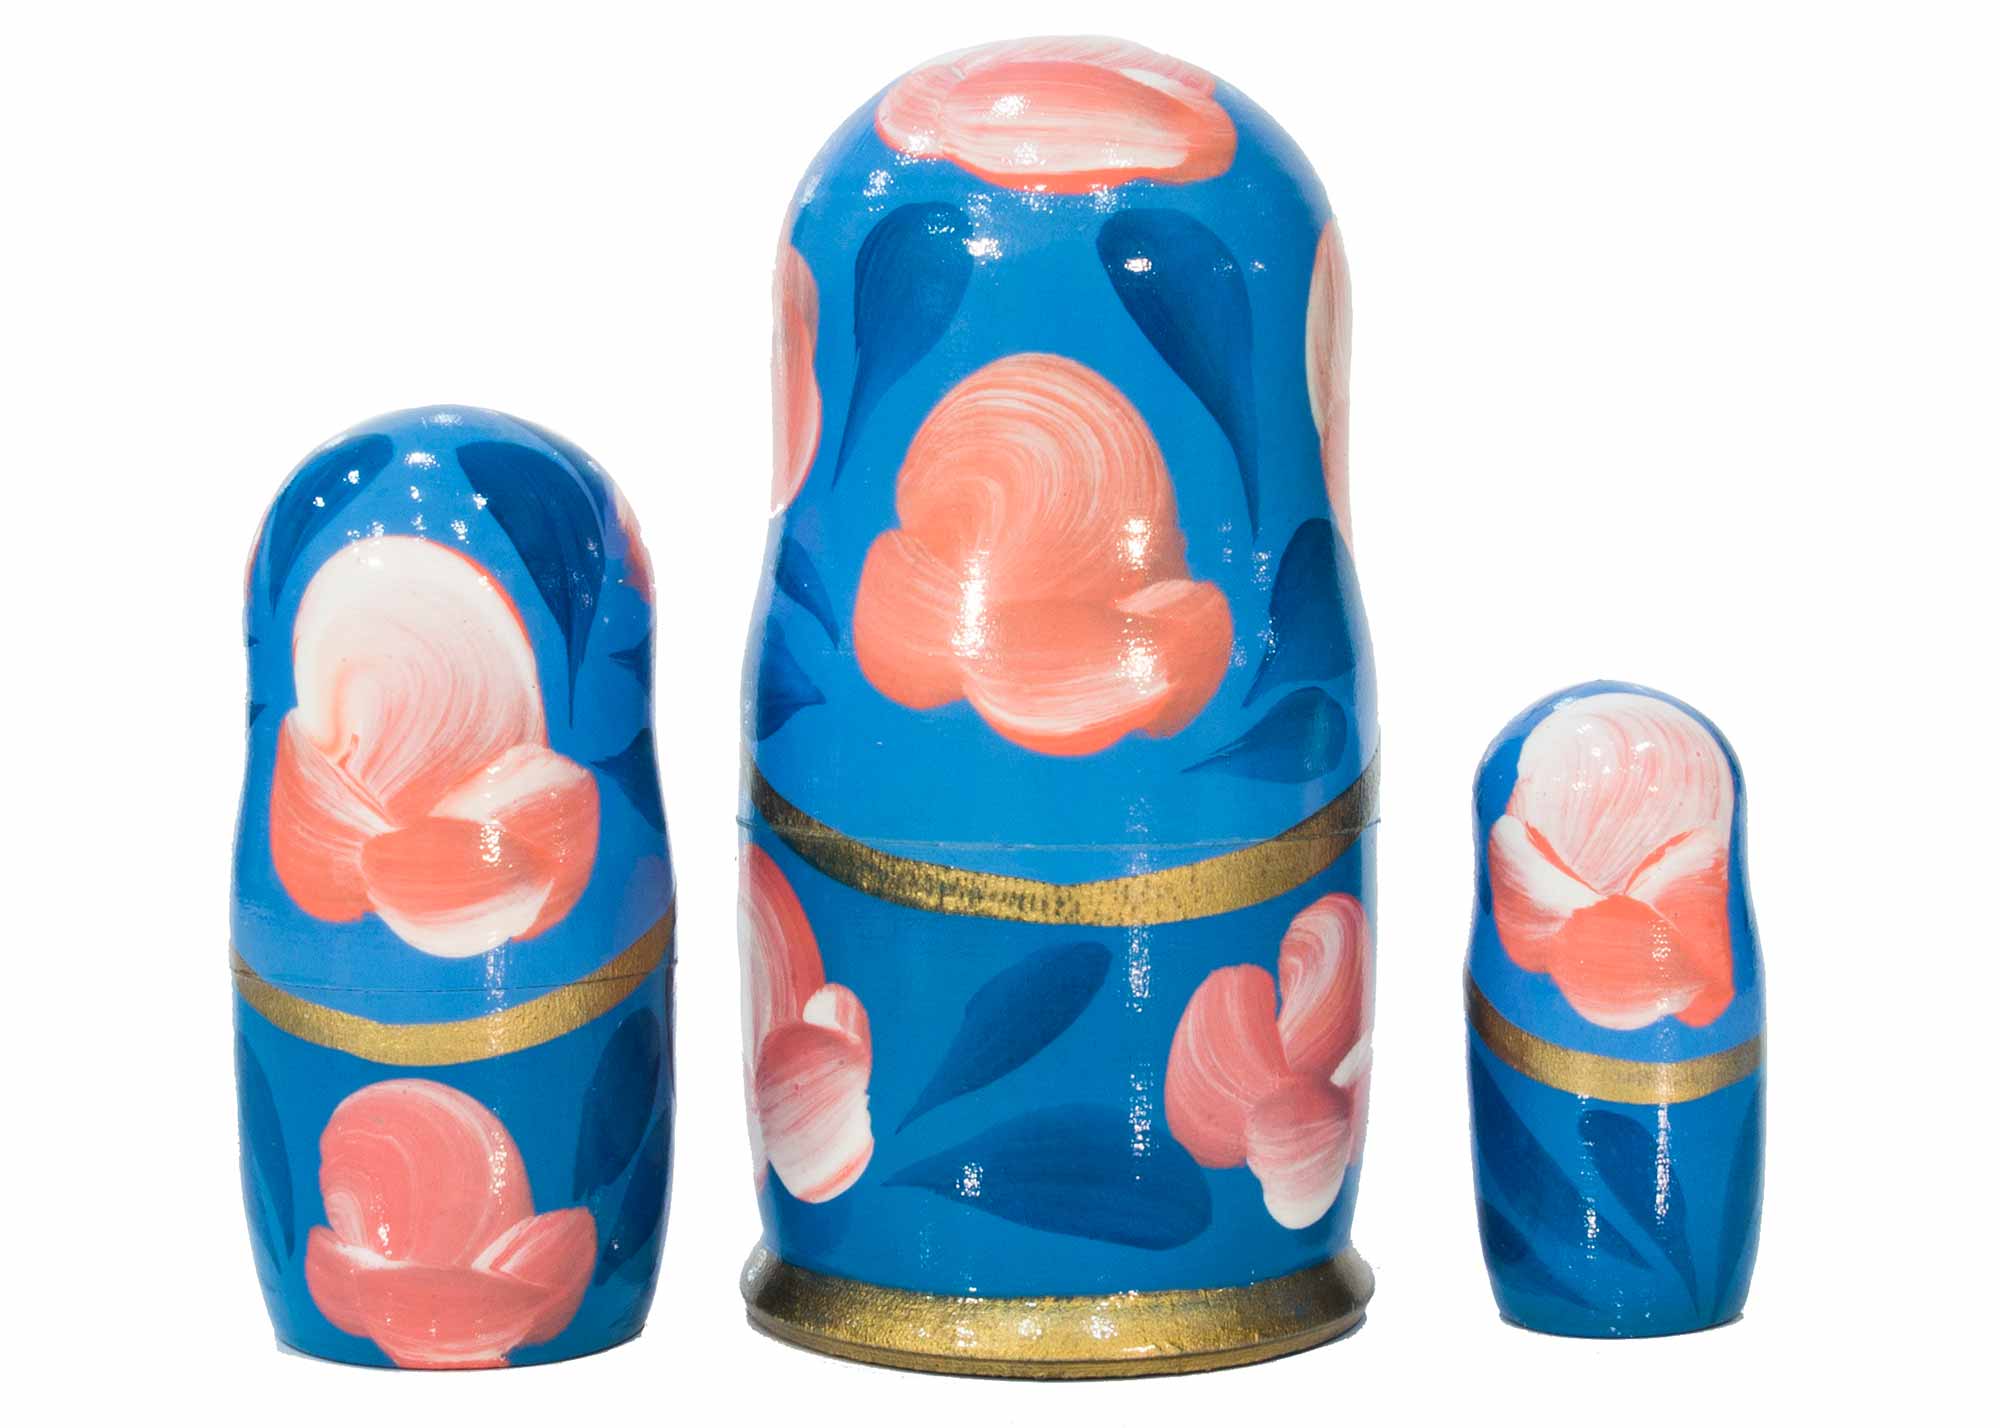 Buy Saint Petersburg Nesting Doll 3pc./4" - Blue at GoldenCockerel.com